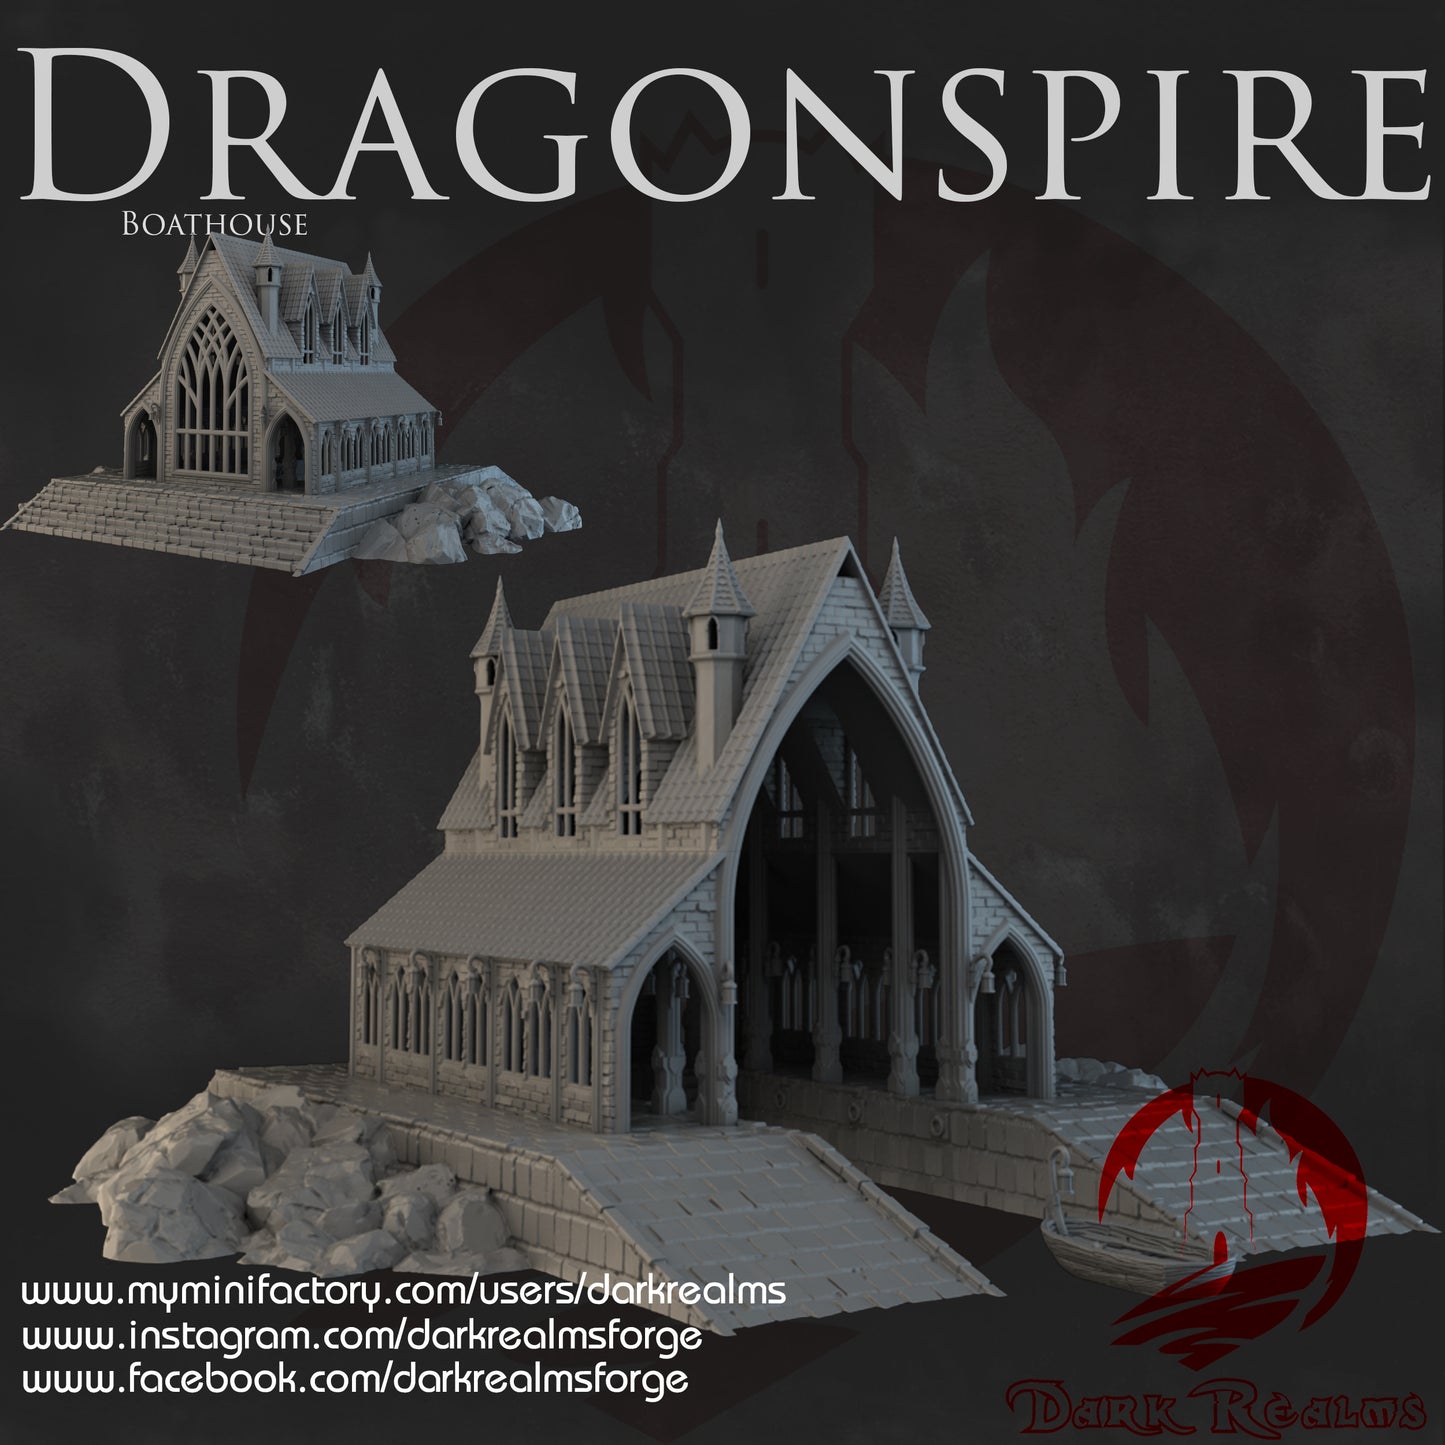 Dragonspire Boathouse Lodge